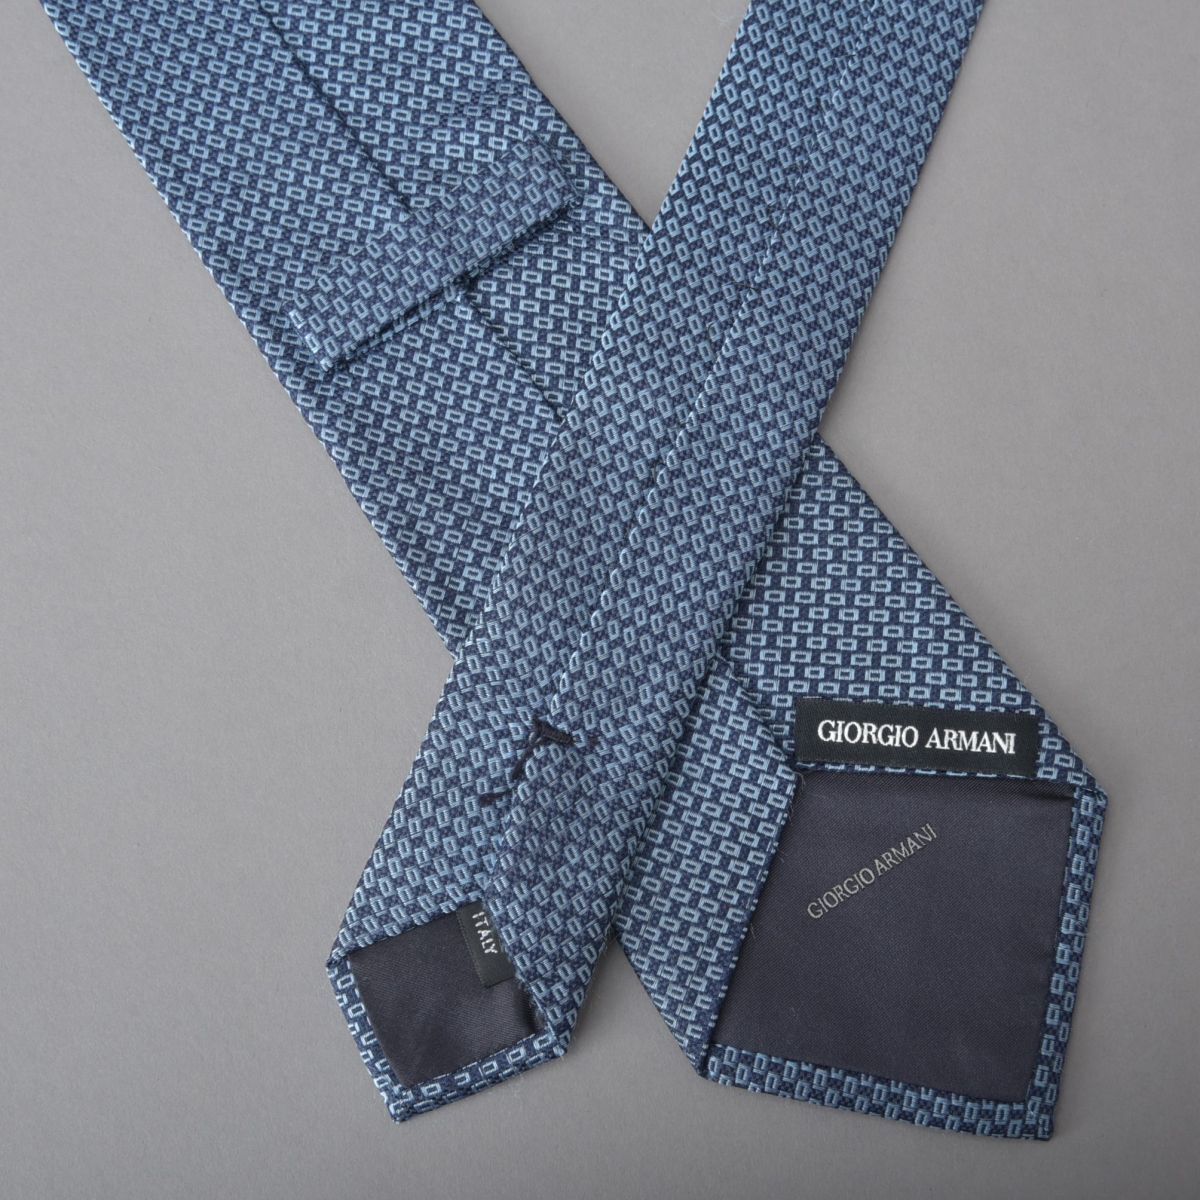  хорошая вещь joru geo Armani галстук rek tang ru шелк голубой темно-синий 4 квадратная форма общий рисунок бизнес джентльмен костюм ARMANI бренд *N69